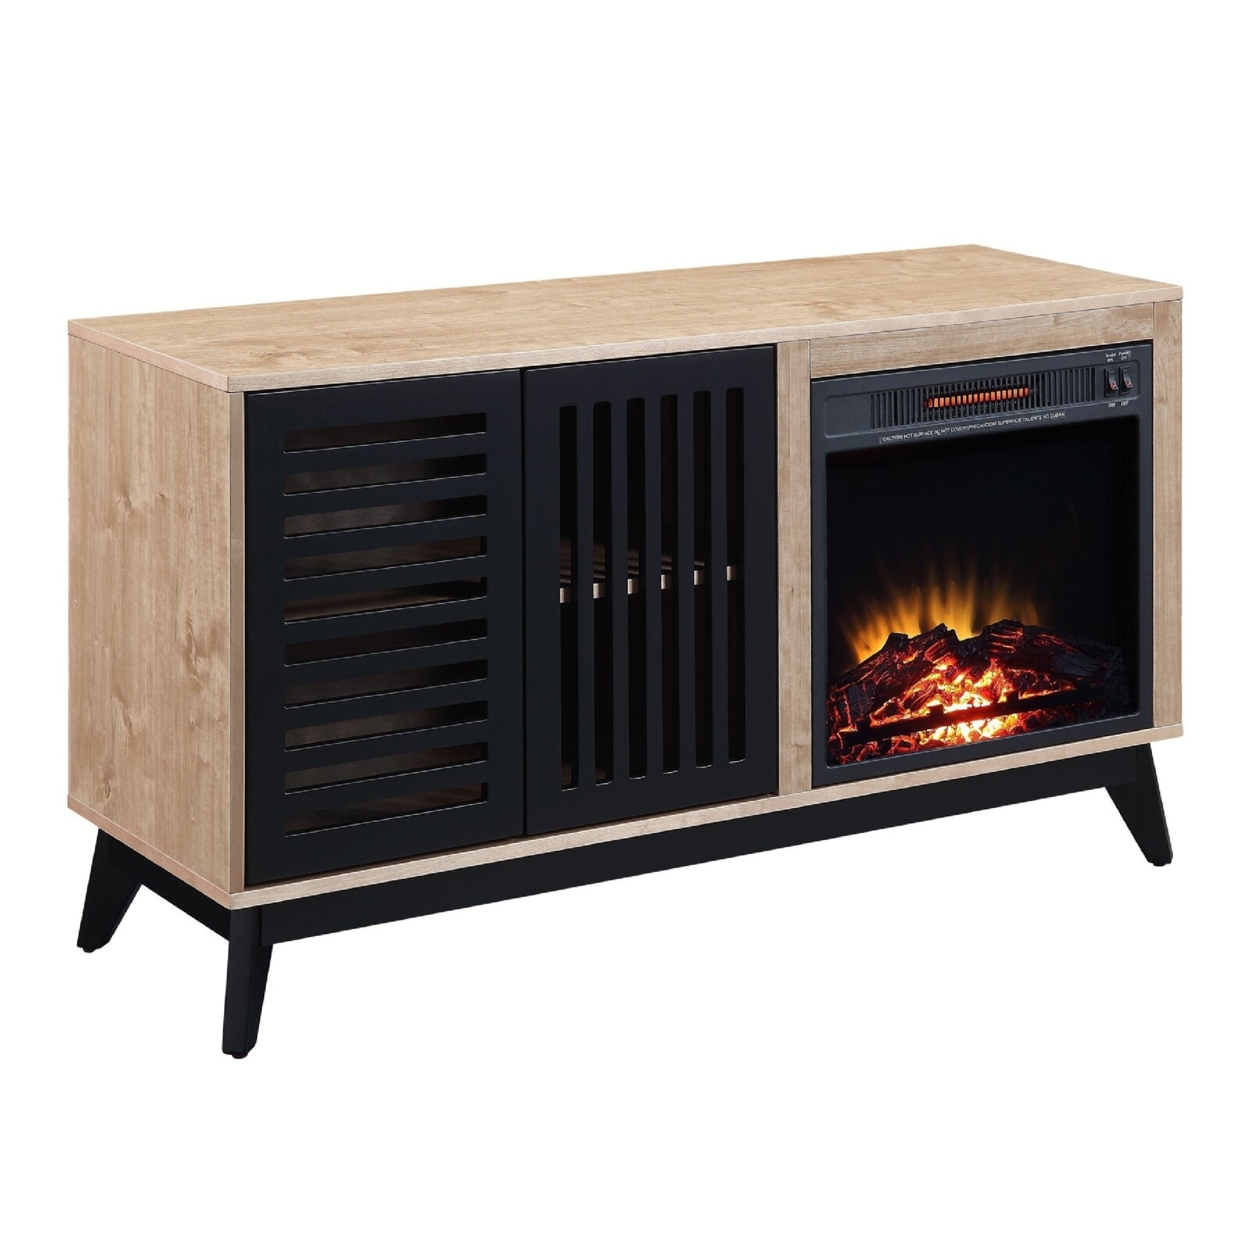 Nael 46 Inch Wood Console Table, LED Electric Fireplace, Oak Brown, Black- Saltoro Sherpi